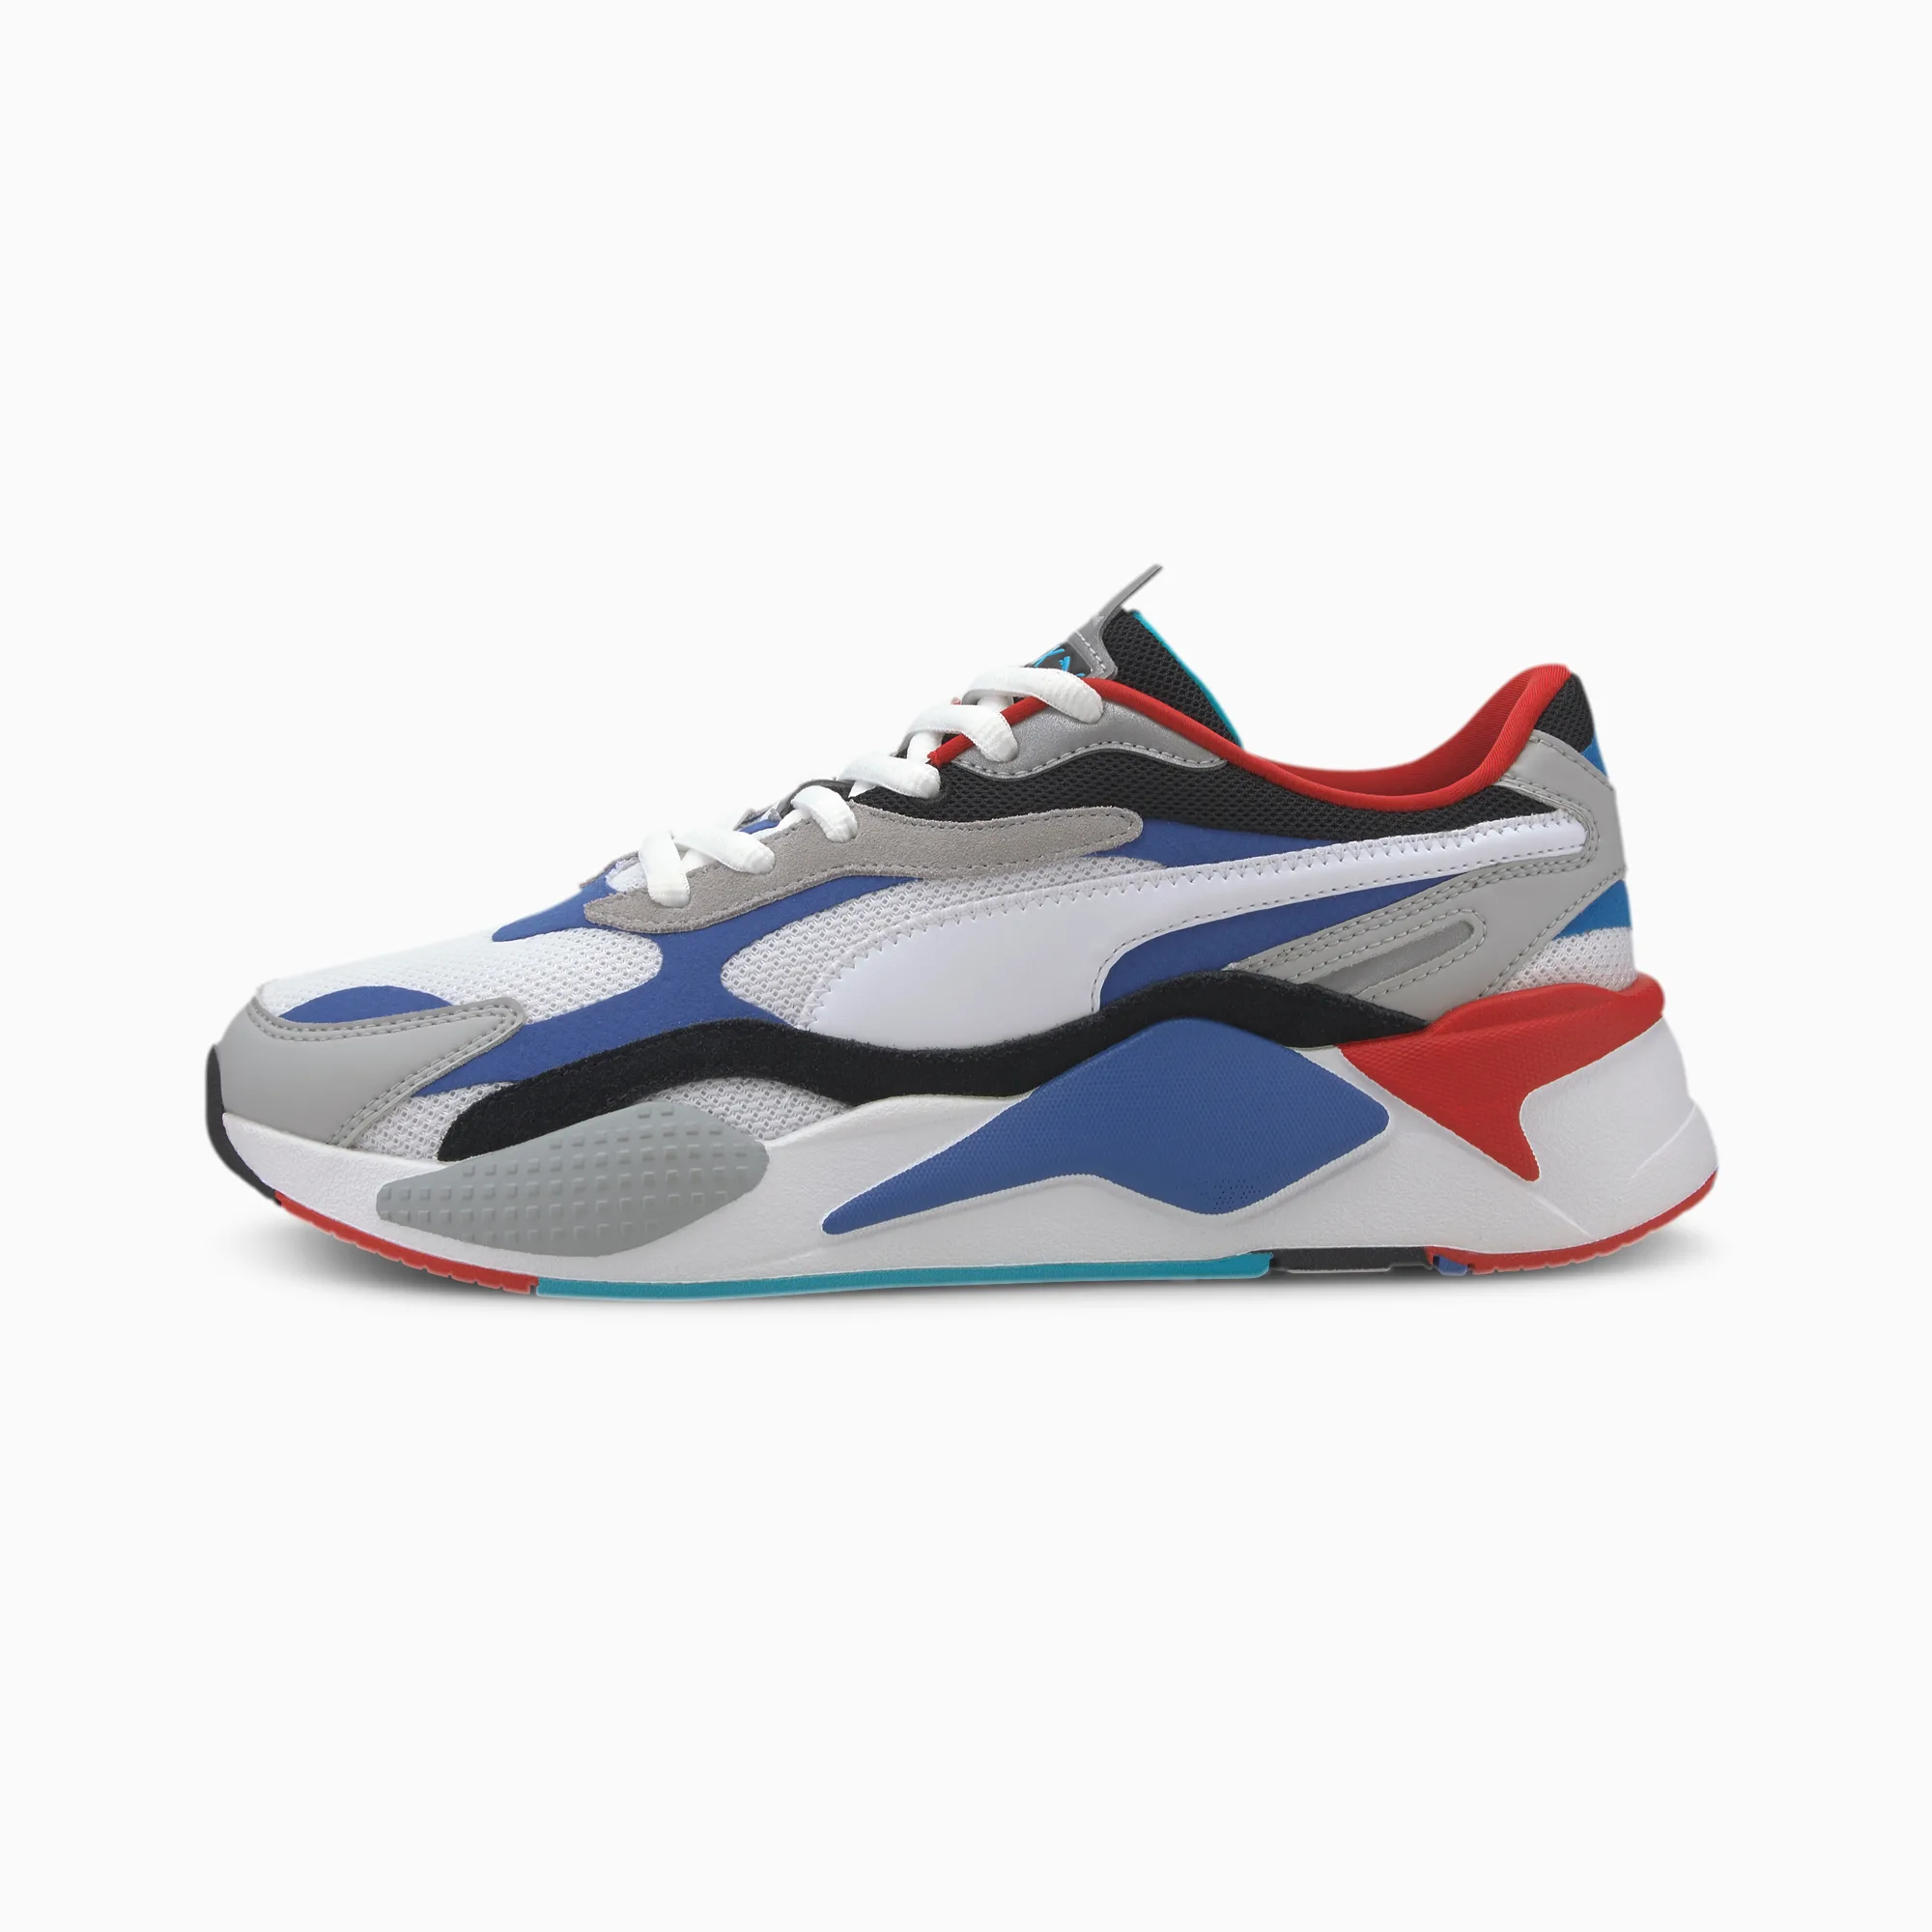 Puma sneakers RSX Size 11 | eBay